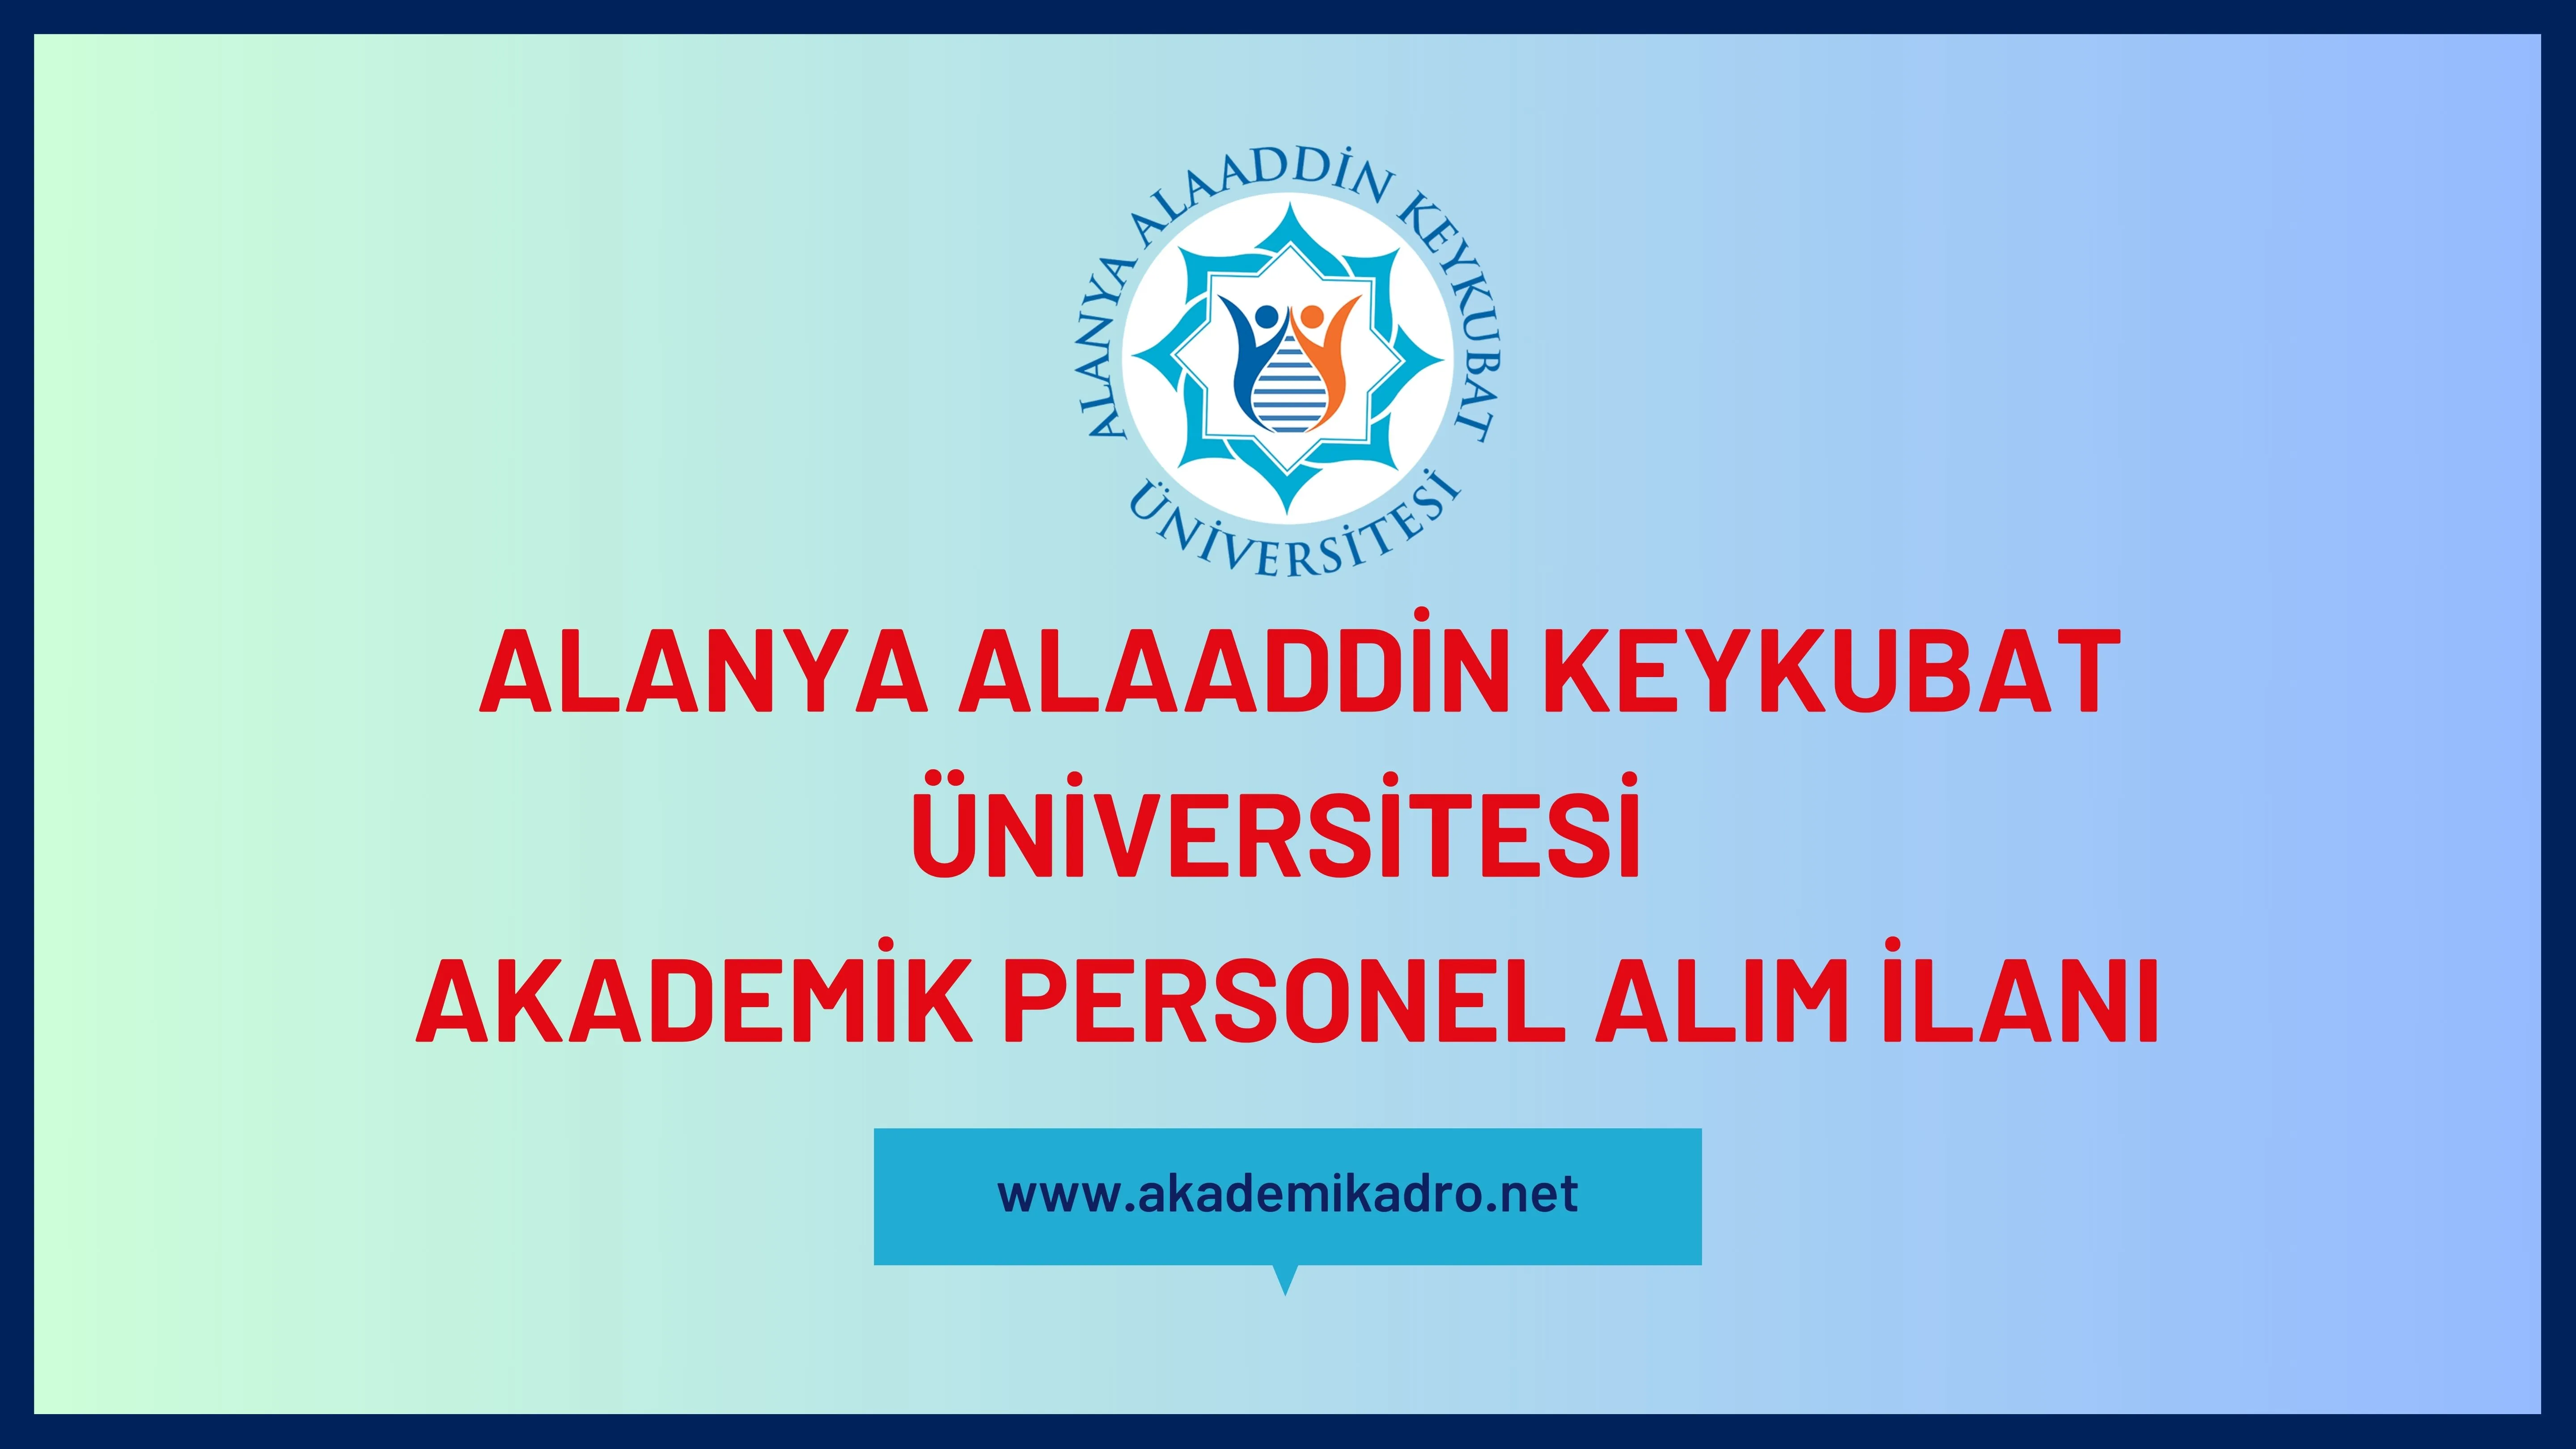 Alanya Alaaddin Keykubat Üniversitesi 22 akademik personel alacak.